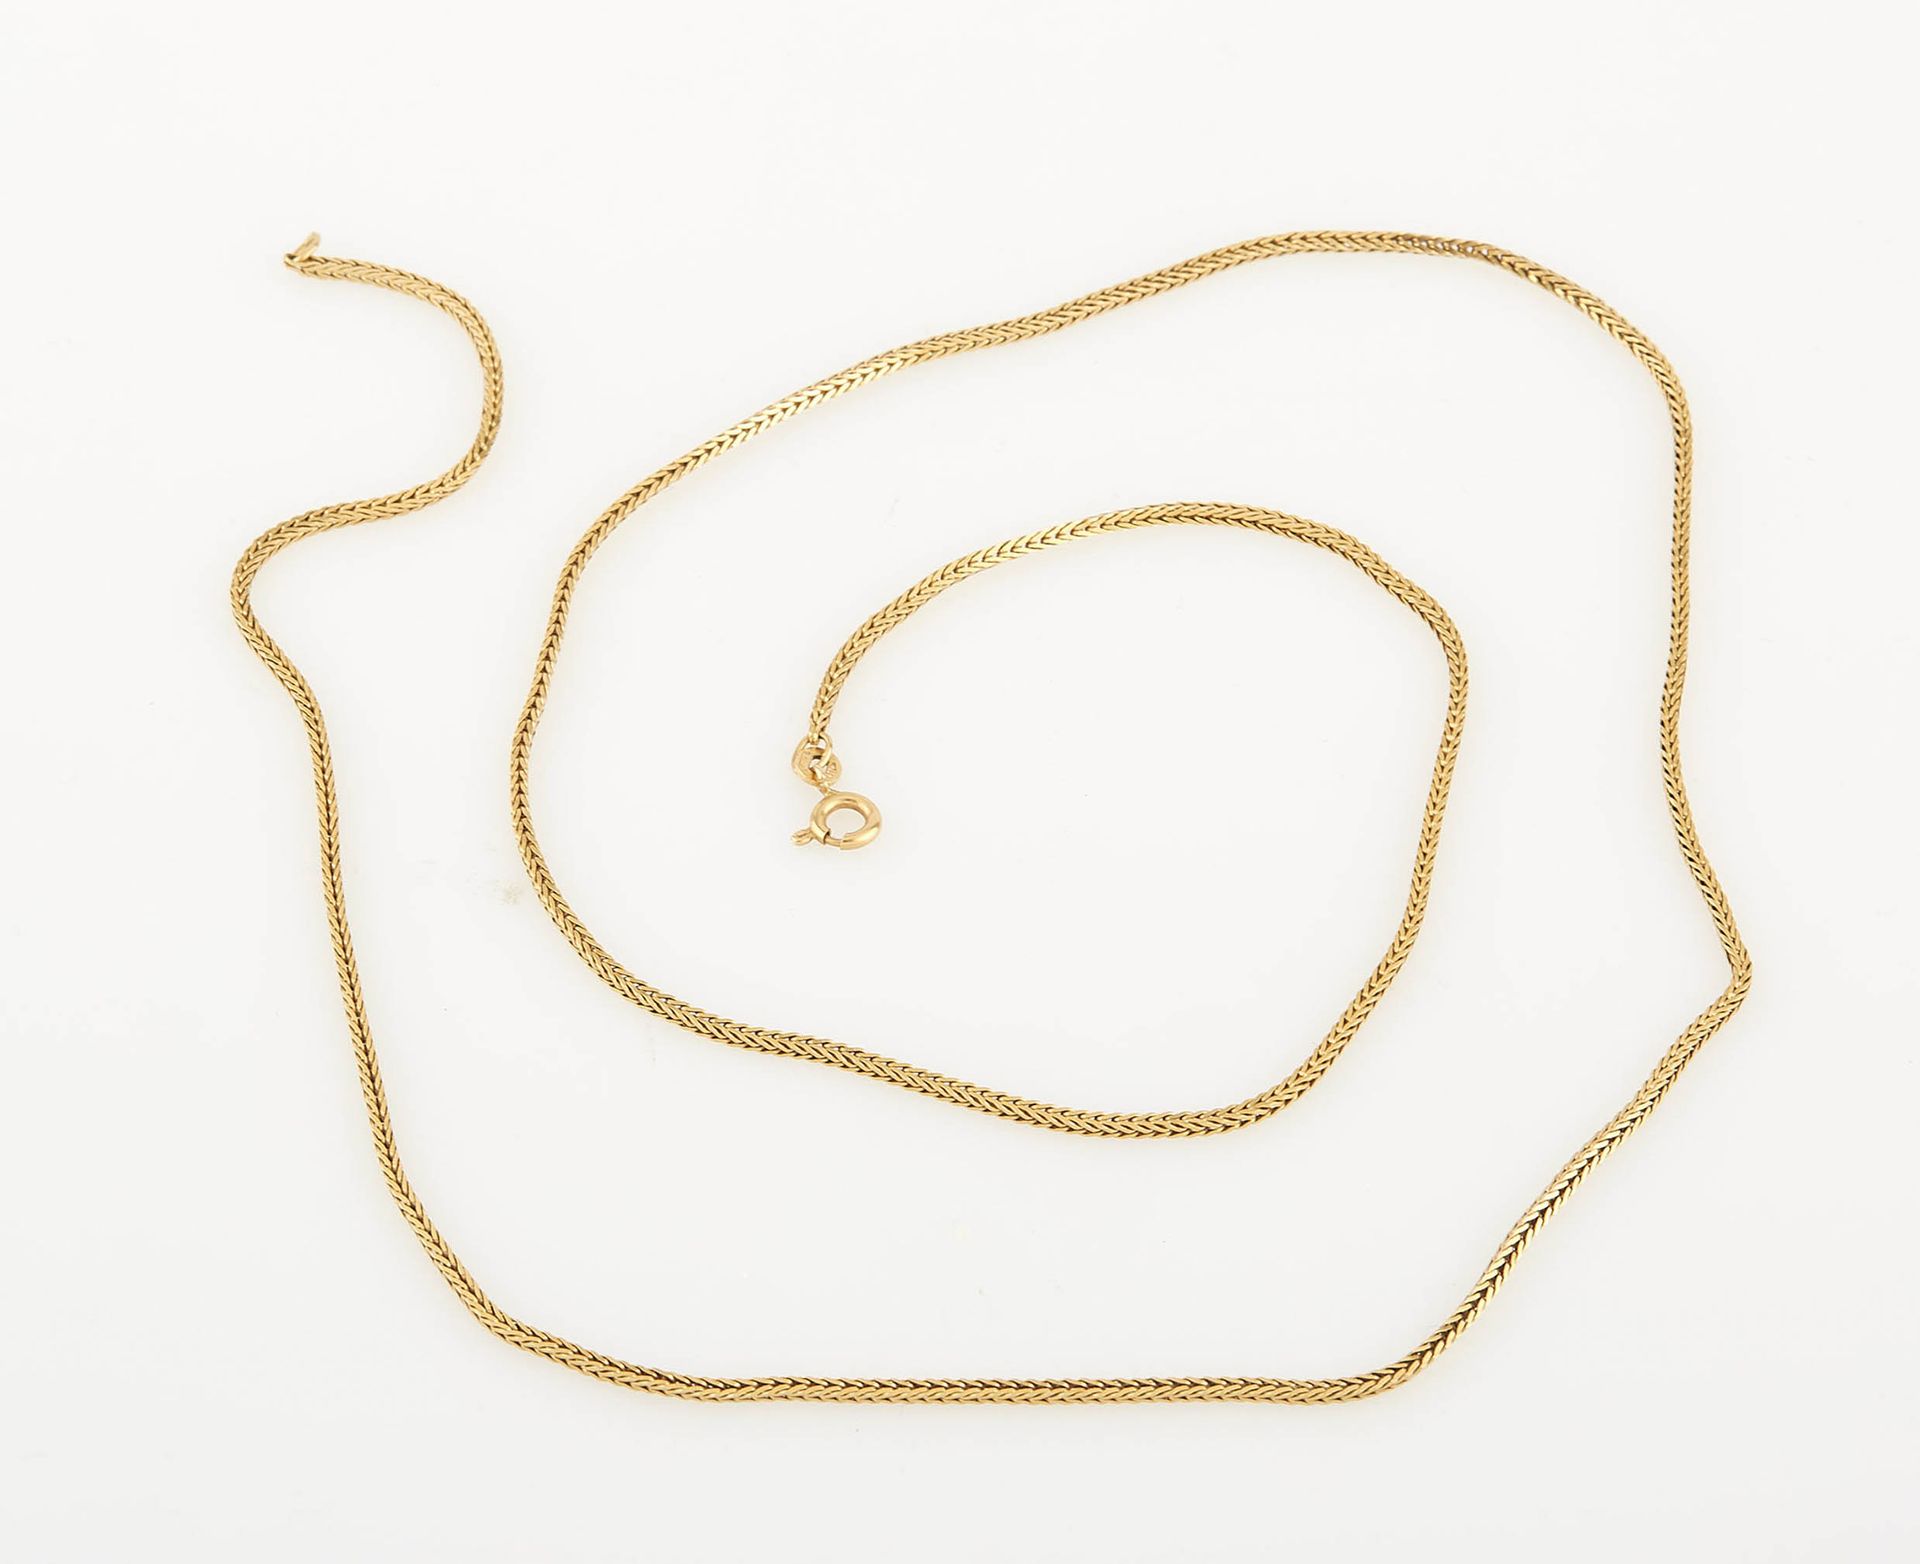 Null Chaine en or jaune maille vénitienne. Long. : 70 cm. Poids : 12,60 g.